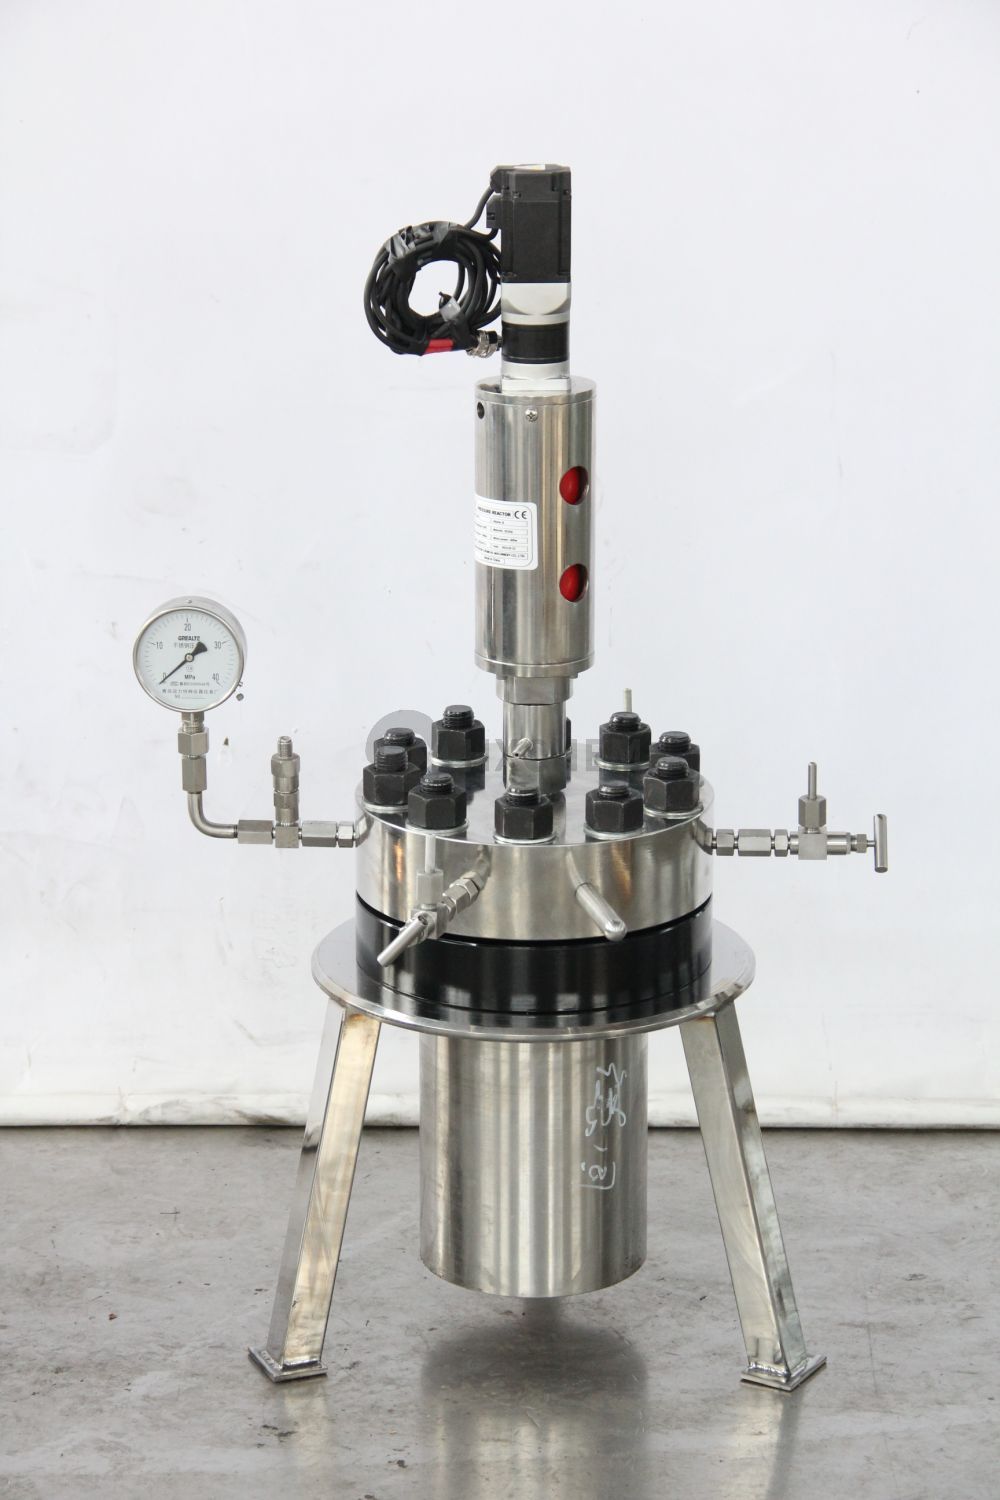 Lab pressure reactor